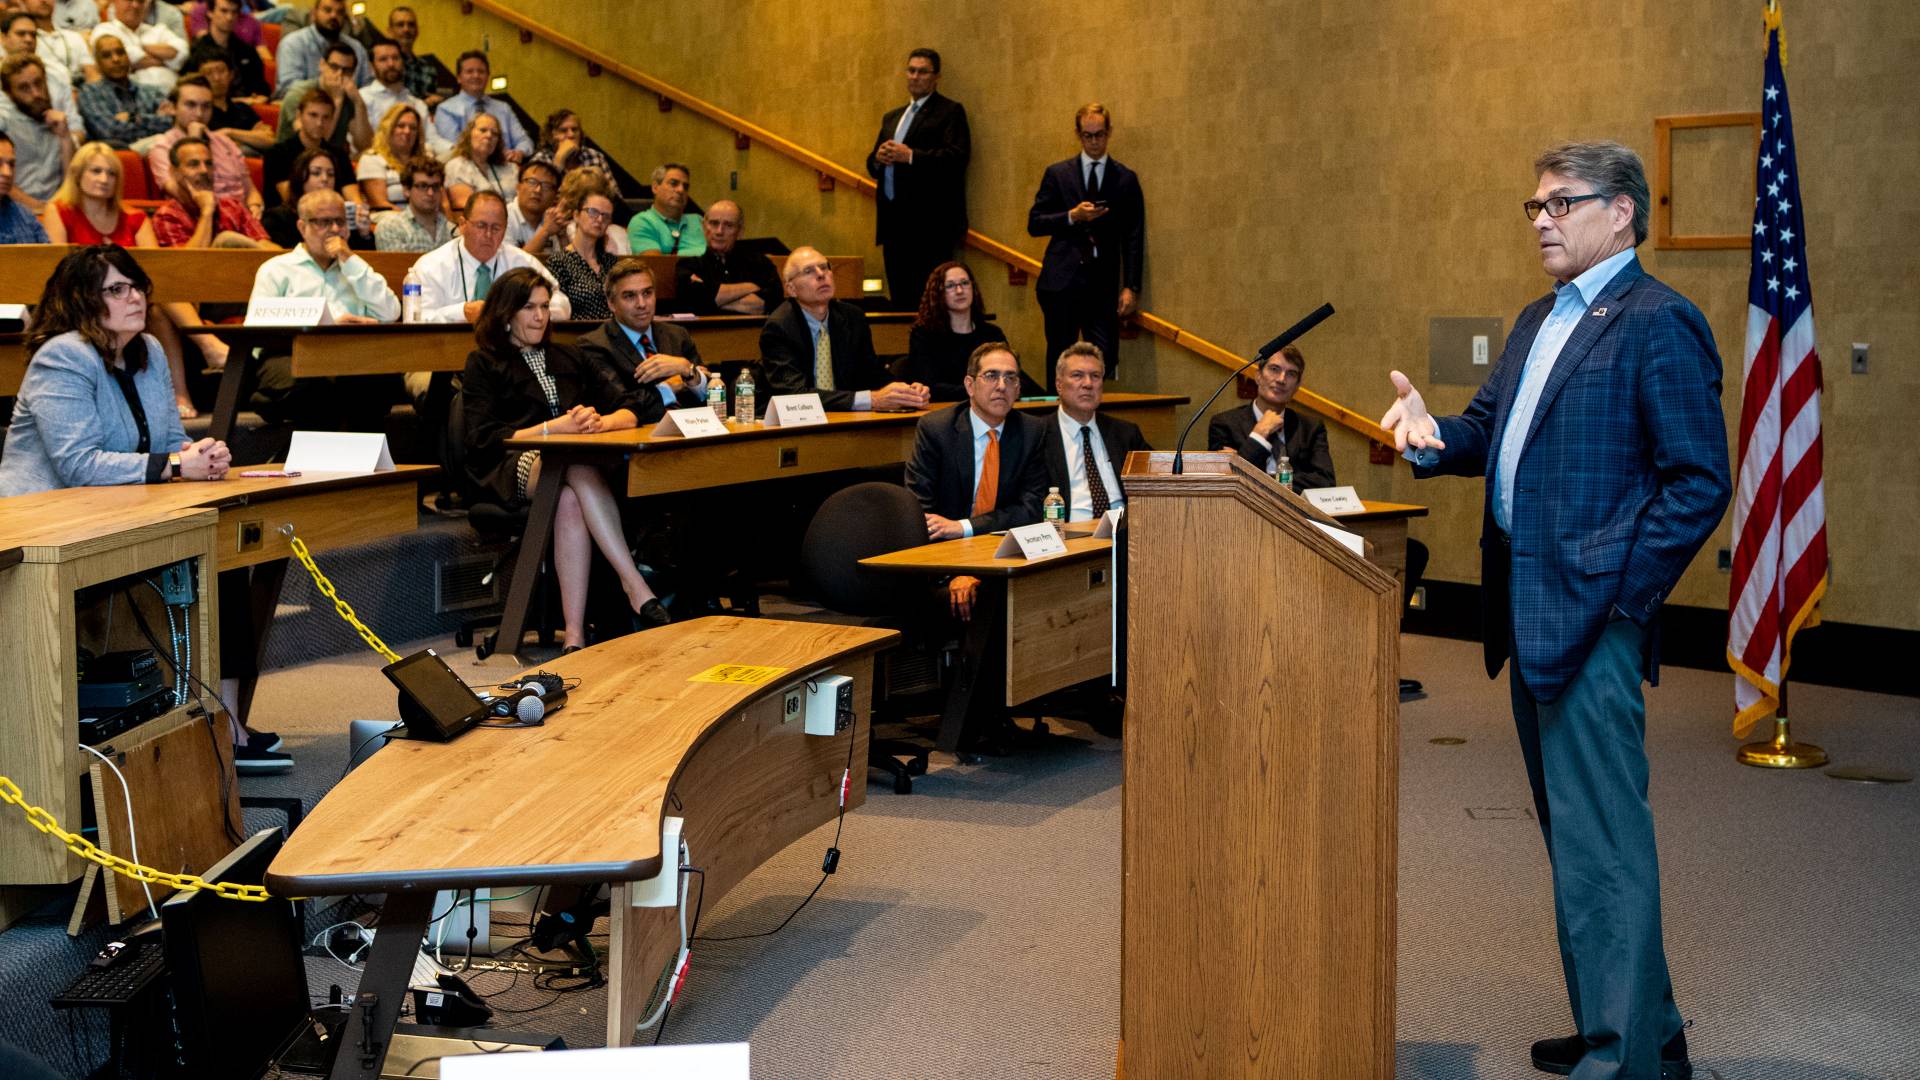 Rick Perry speaks to audience at Princeton Plasma Physics Laboratory